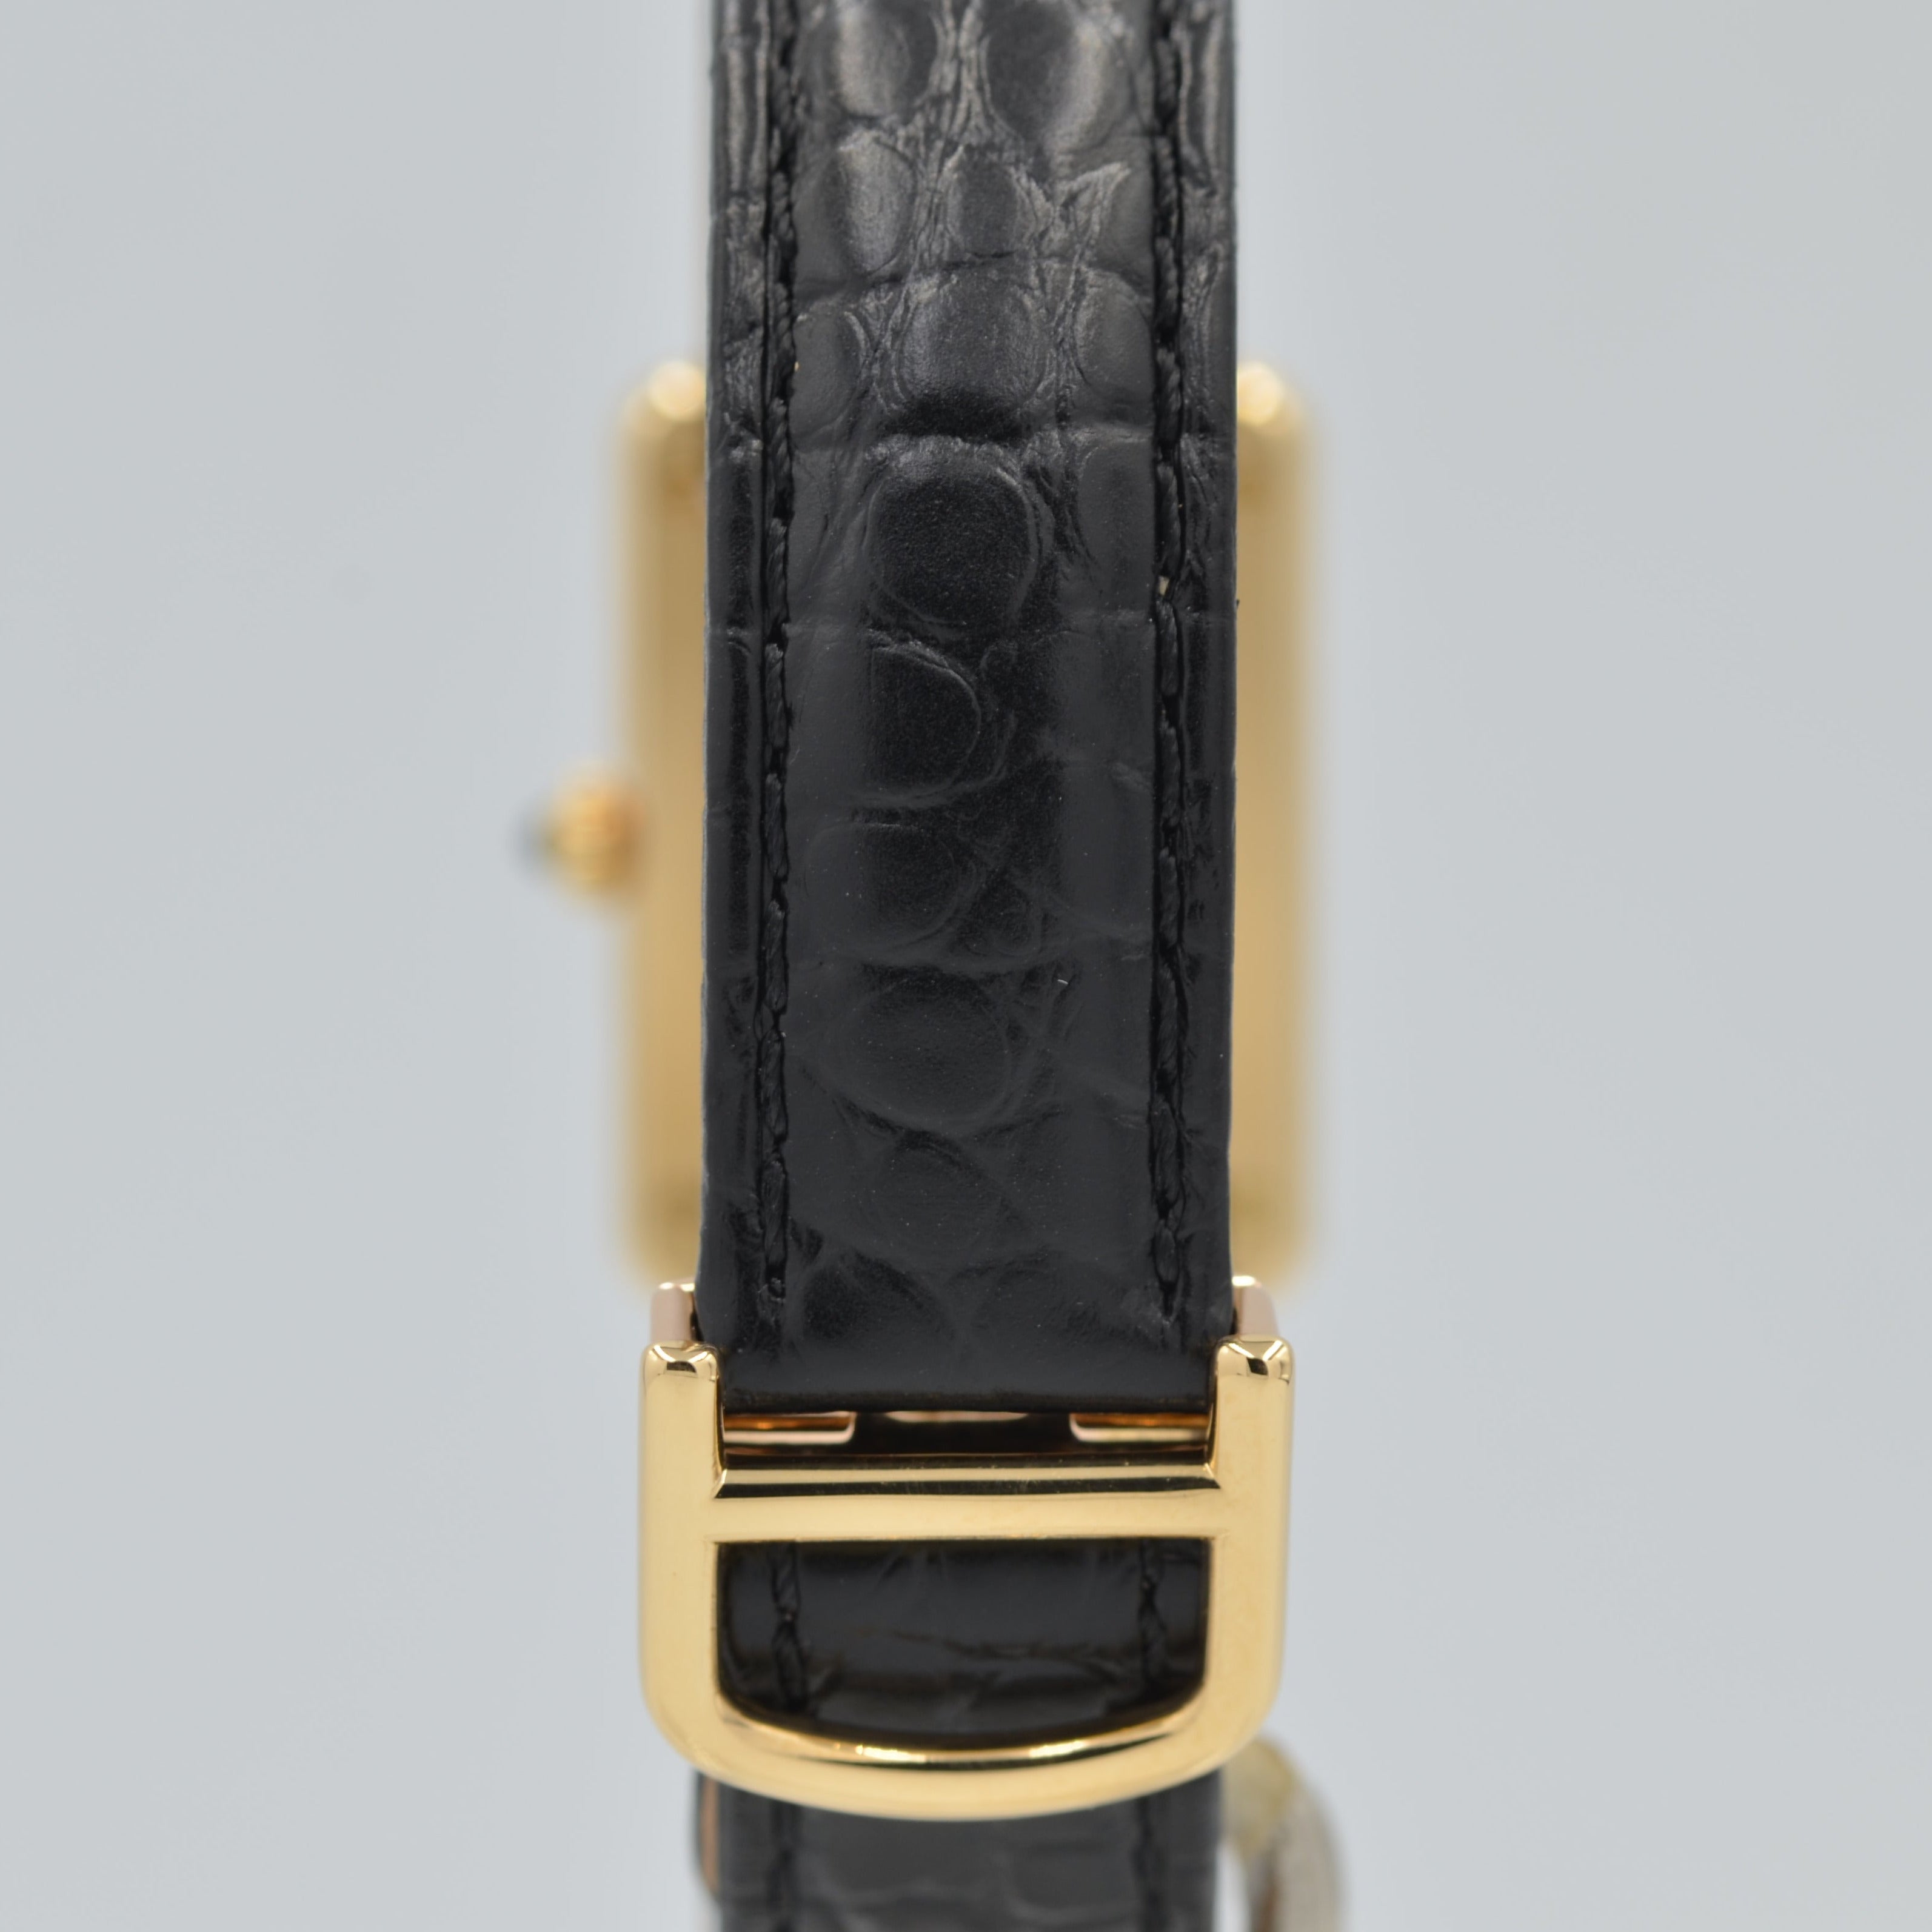 Cartier】タンクルイカルティエSM18KYG 純正18金Dバックル付き – REGALO vintage watch